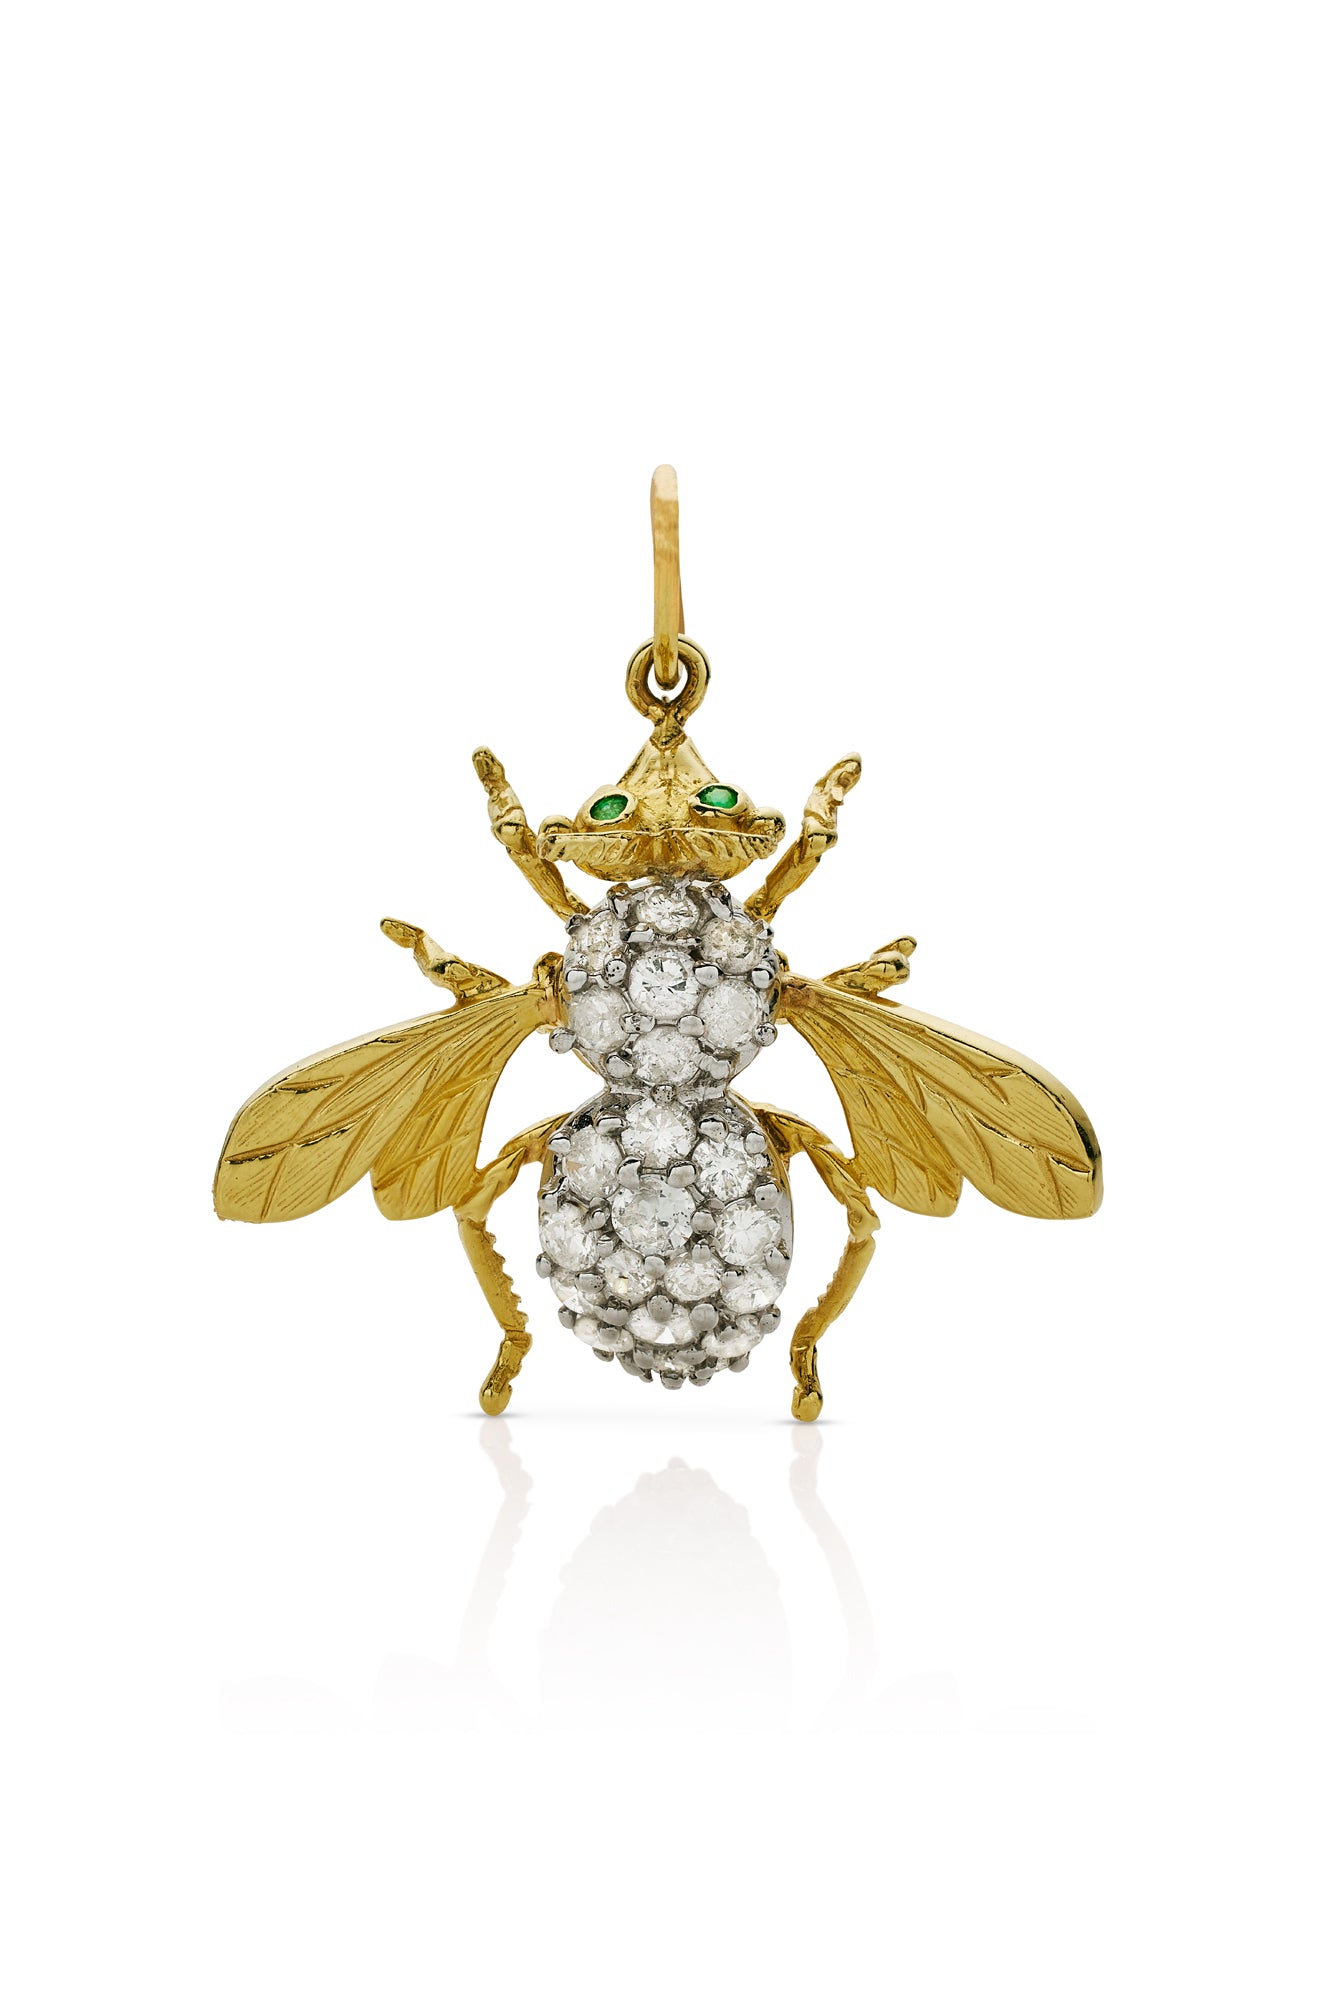 18KY Vintage Diamond Bee Charm With Emerald Eyes